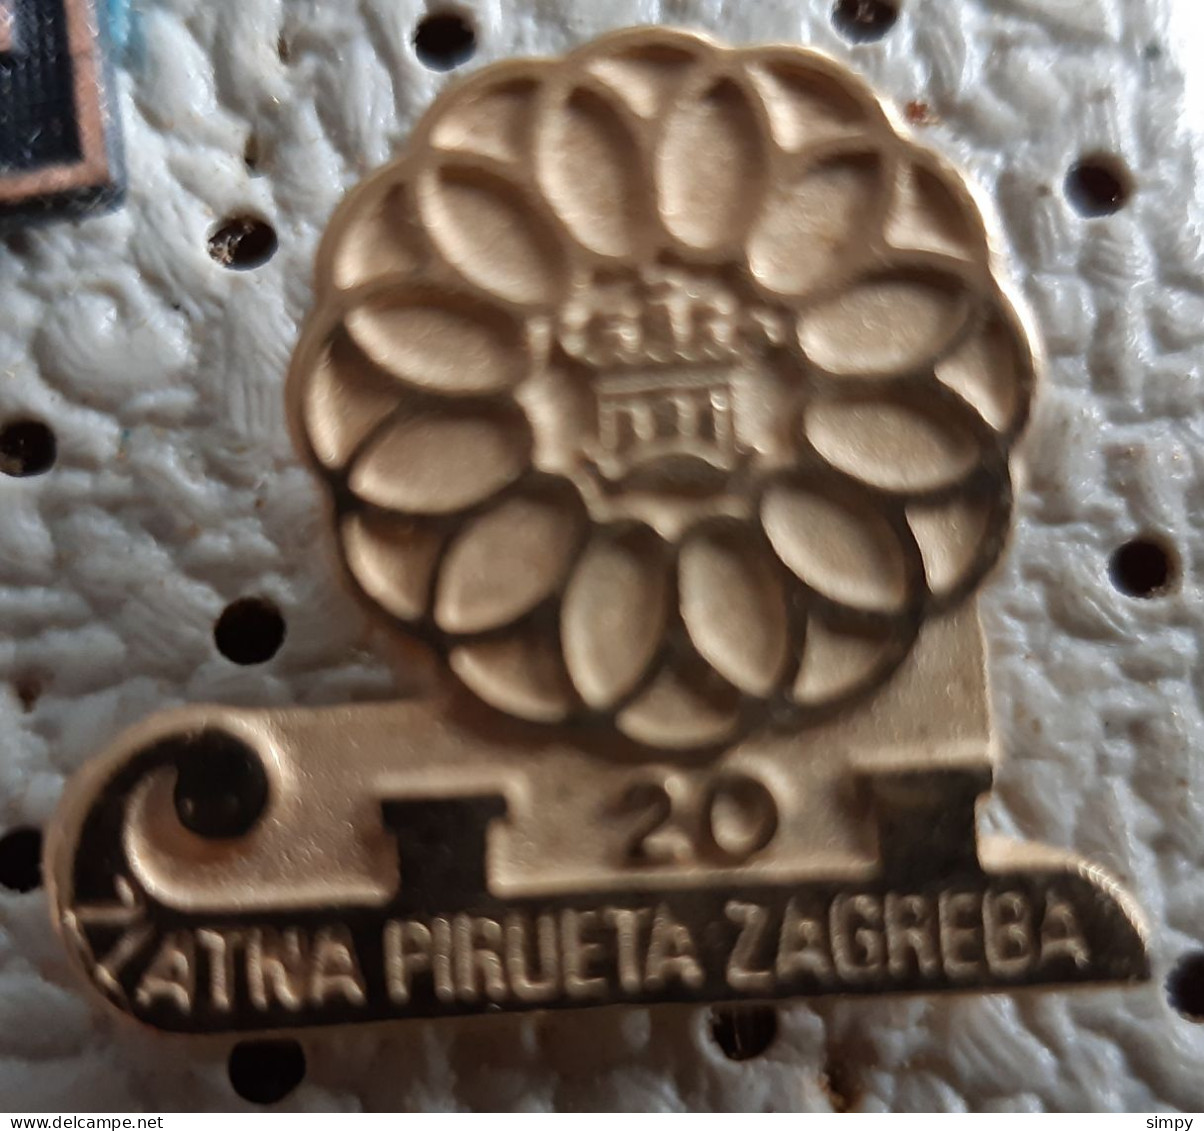 Zlatna Pirueta Zagreb 20 Years  Figure Skating Skate  YUgoslavia Vintage Pin Badge - Patinaje Artístico